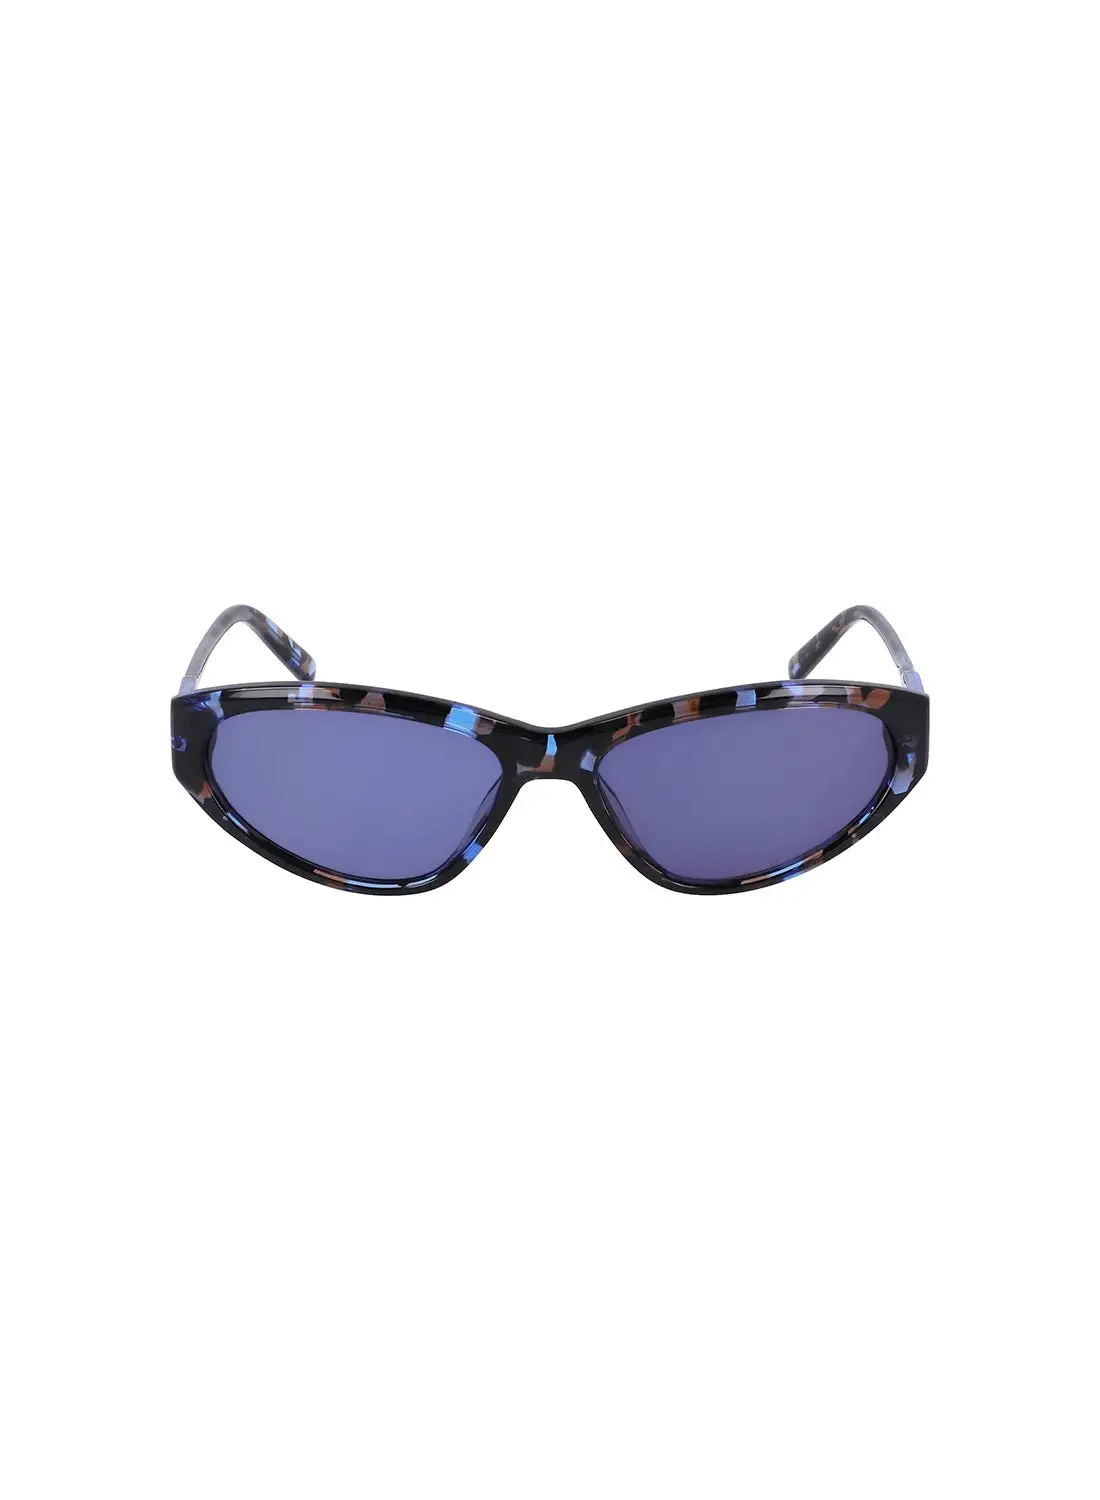 DKNY Women's Oval Sunglasses - DK542S-236-5615 - Lens Size: 56 Mm